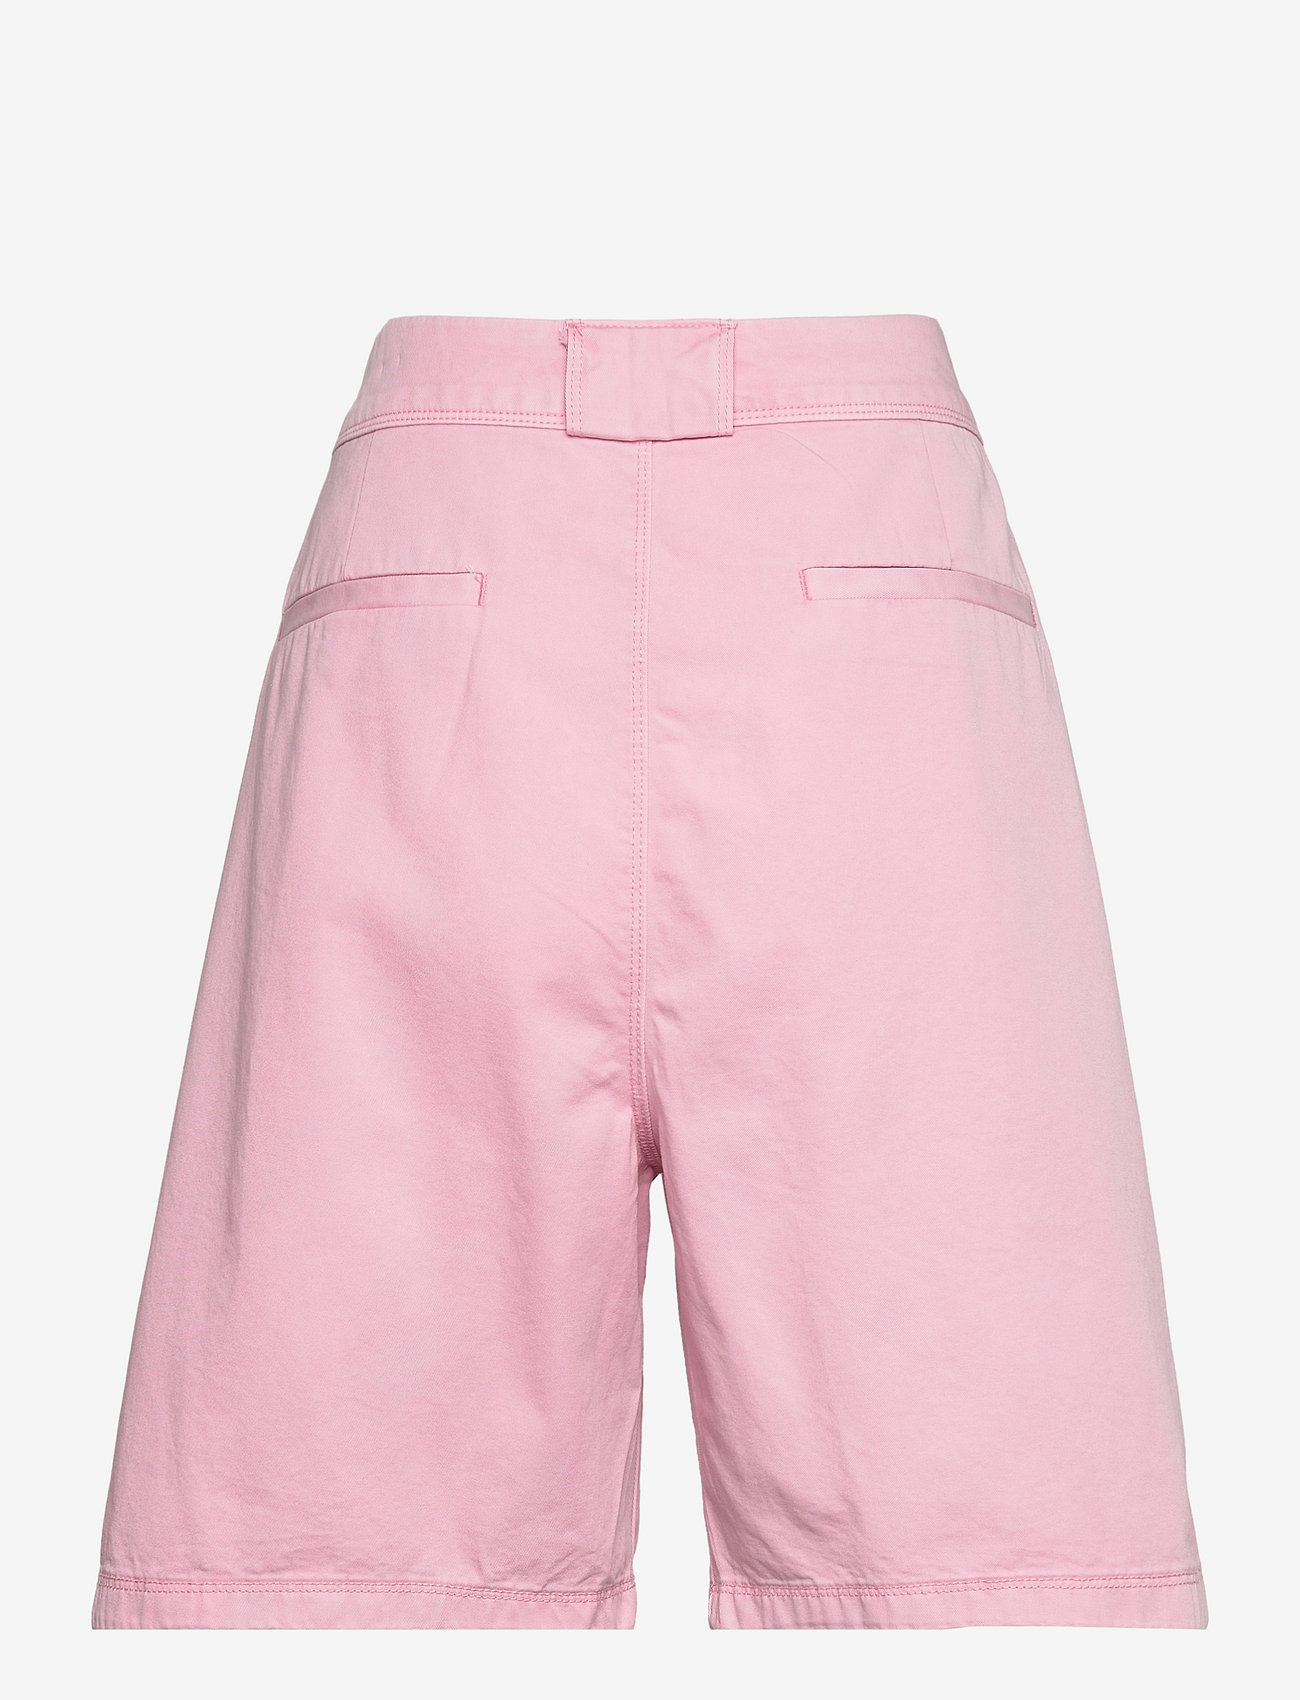 Esprit Casual - Shorts woven - chino shorts - pink - 1